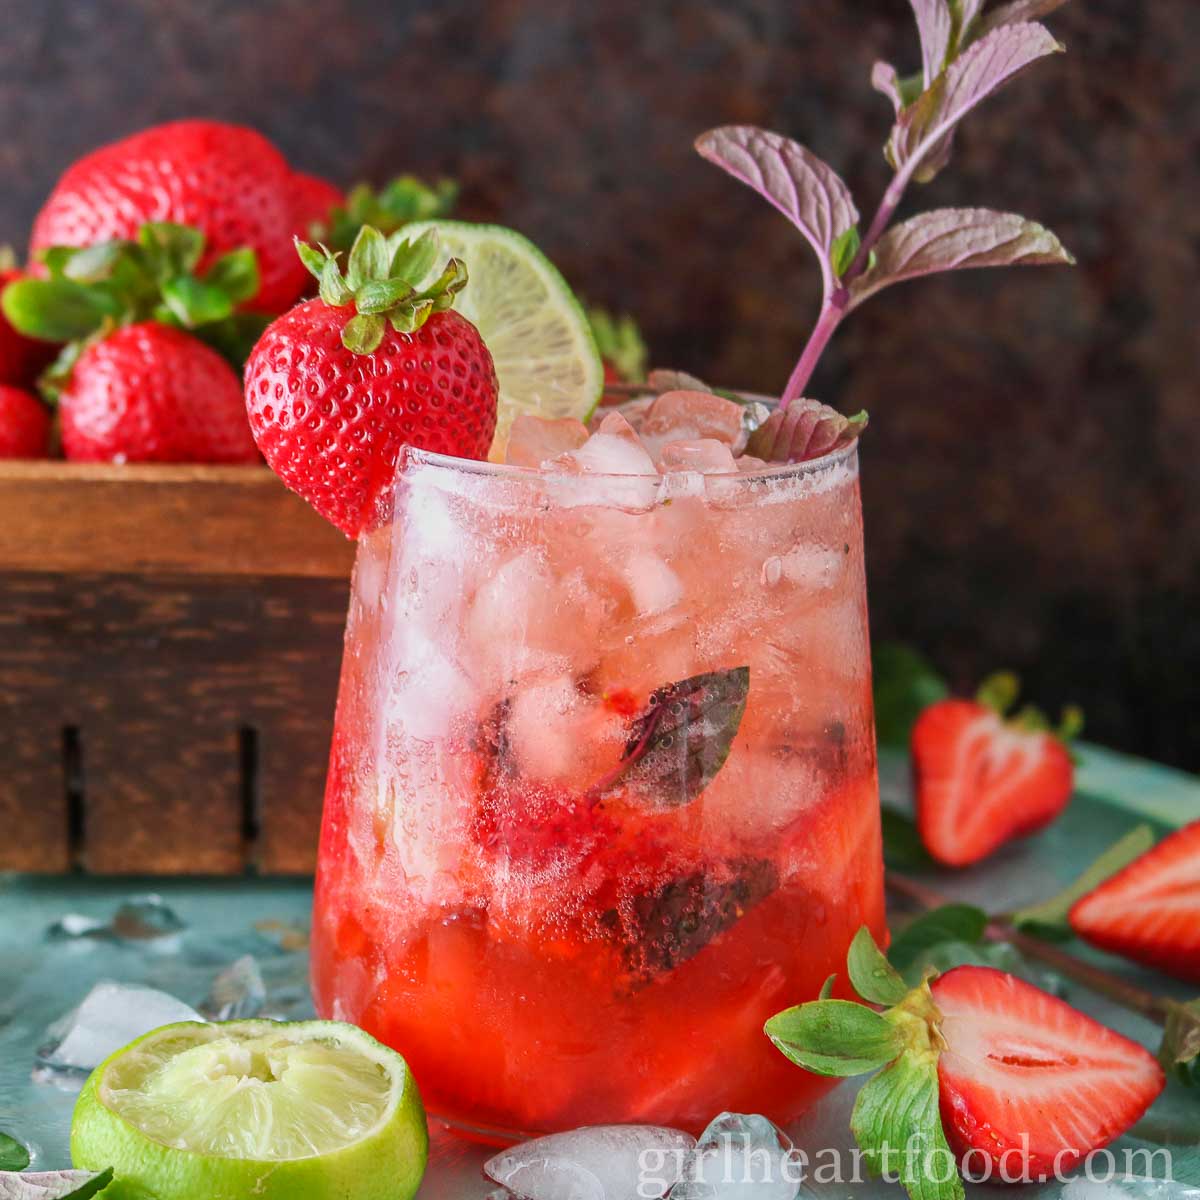 https://girlheartfood.com/wp-content/uploads/2021/06/Strawberry-Mocktail-Recipe-Feature.jpg